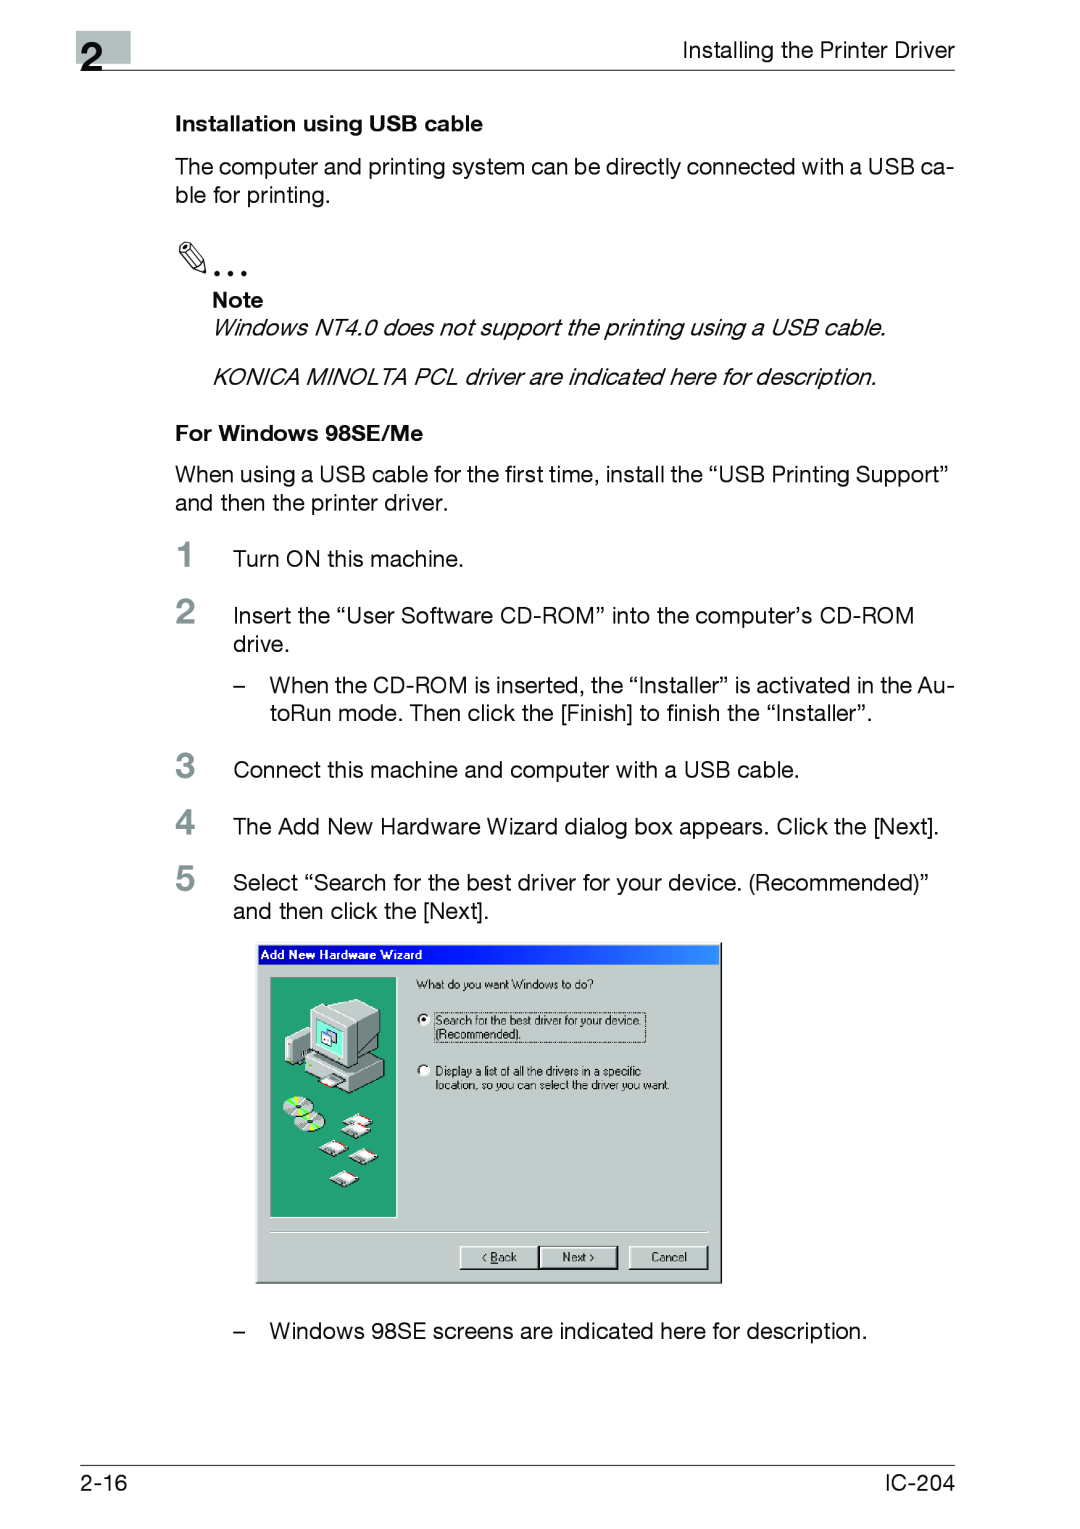 Konica Minolta IC-204 manual Installation using USB cable, For Windows 98SE/Me 